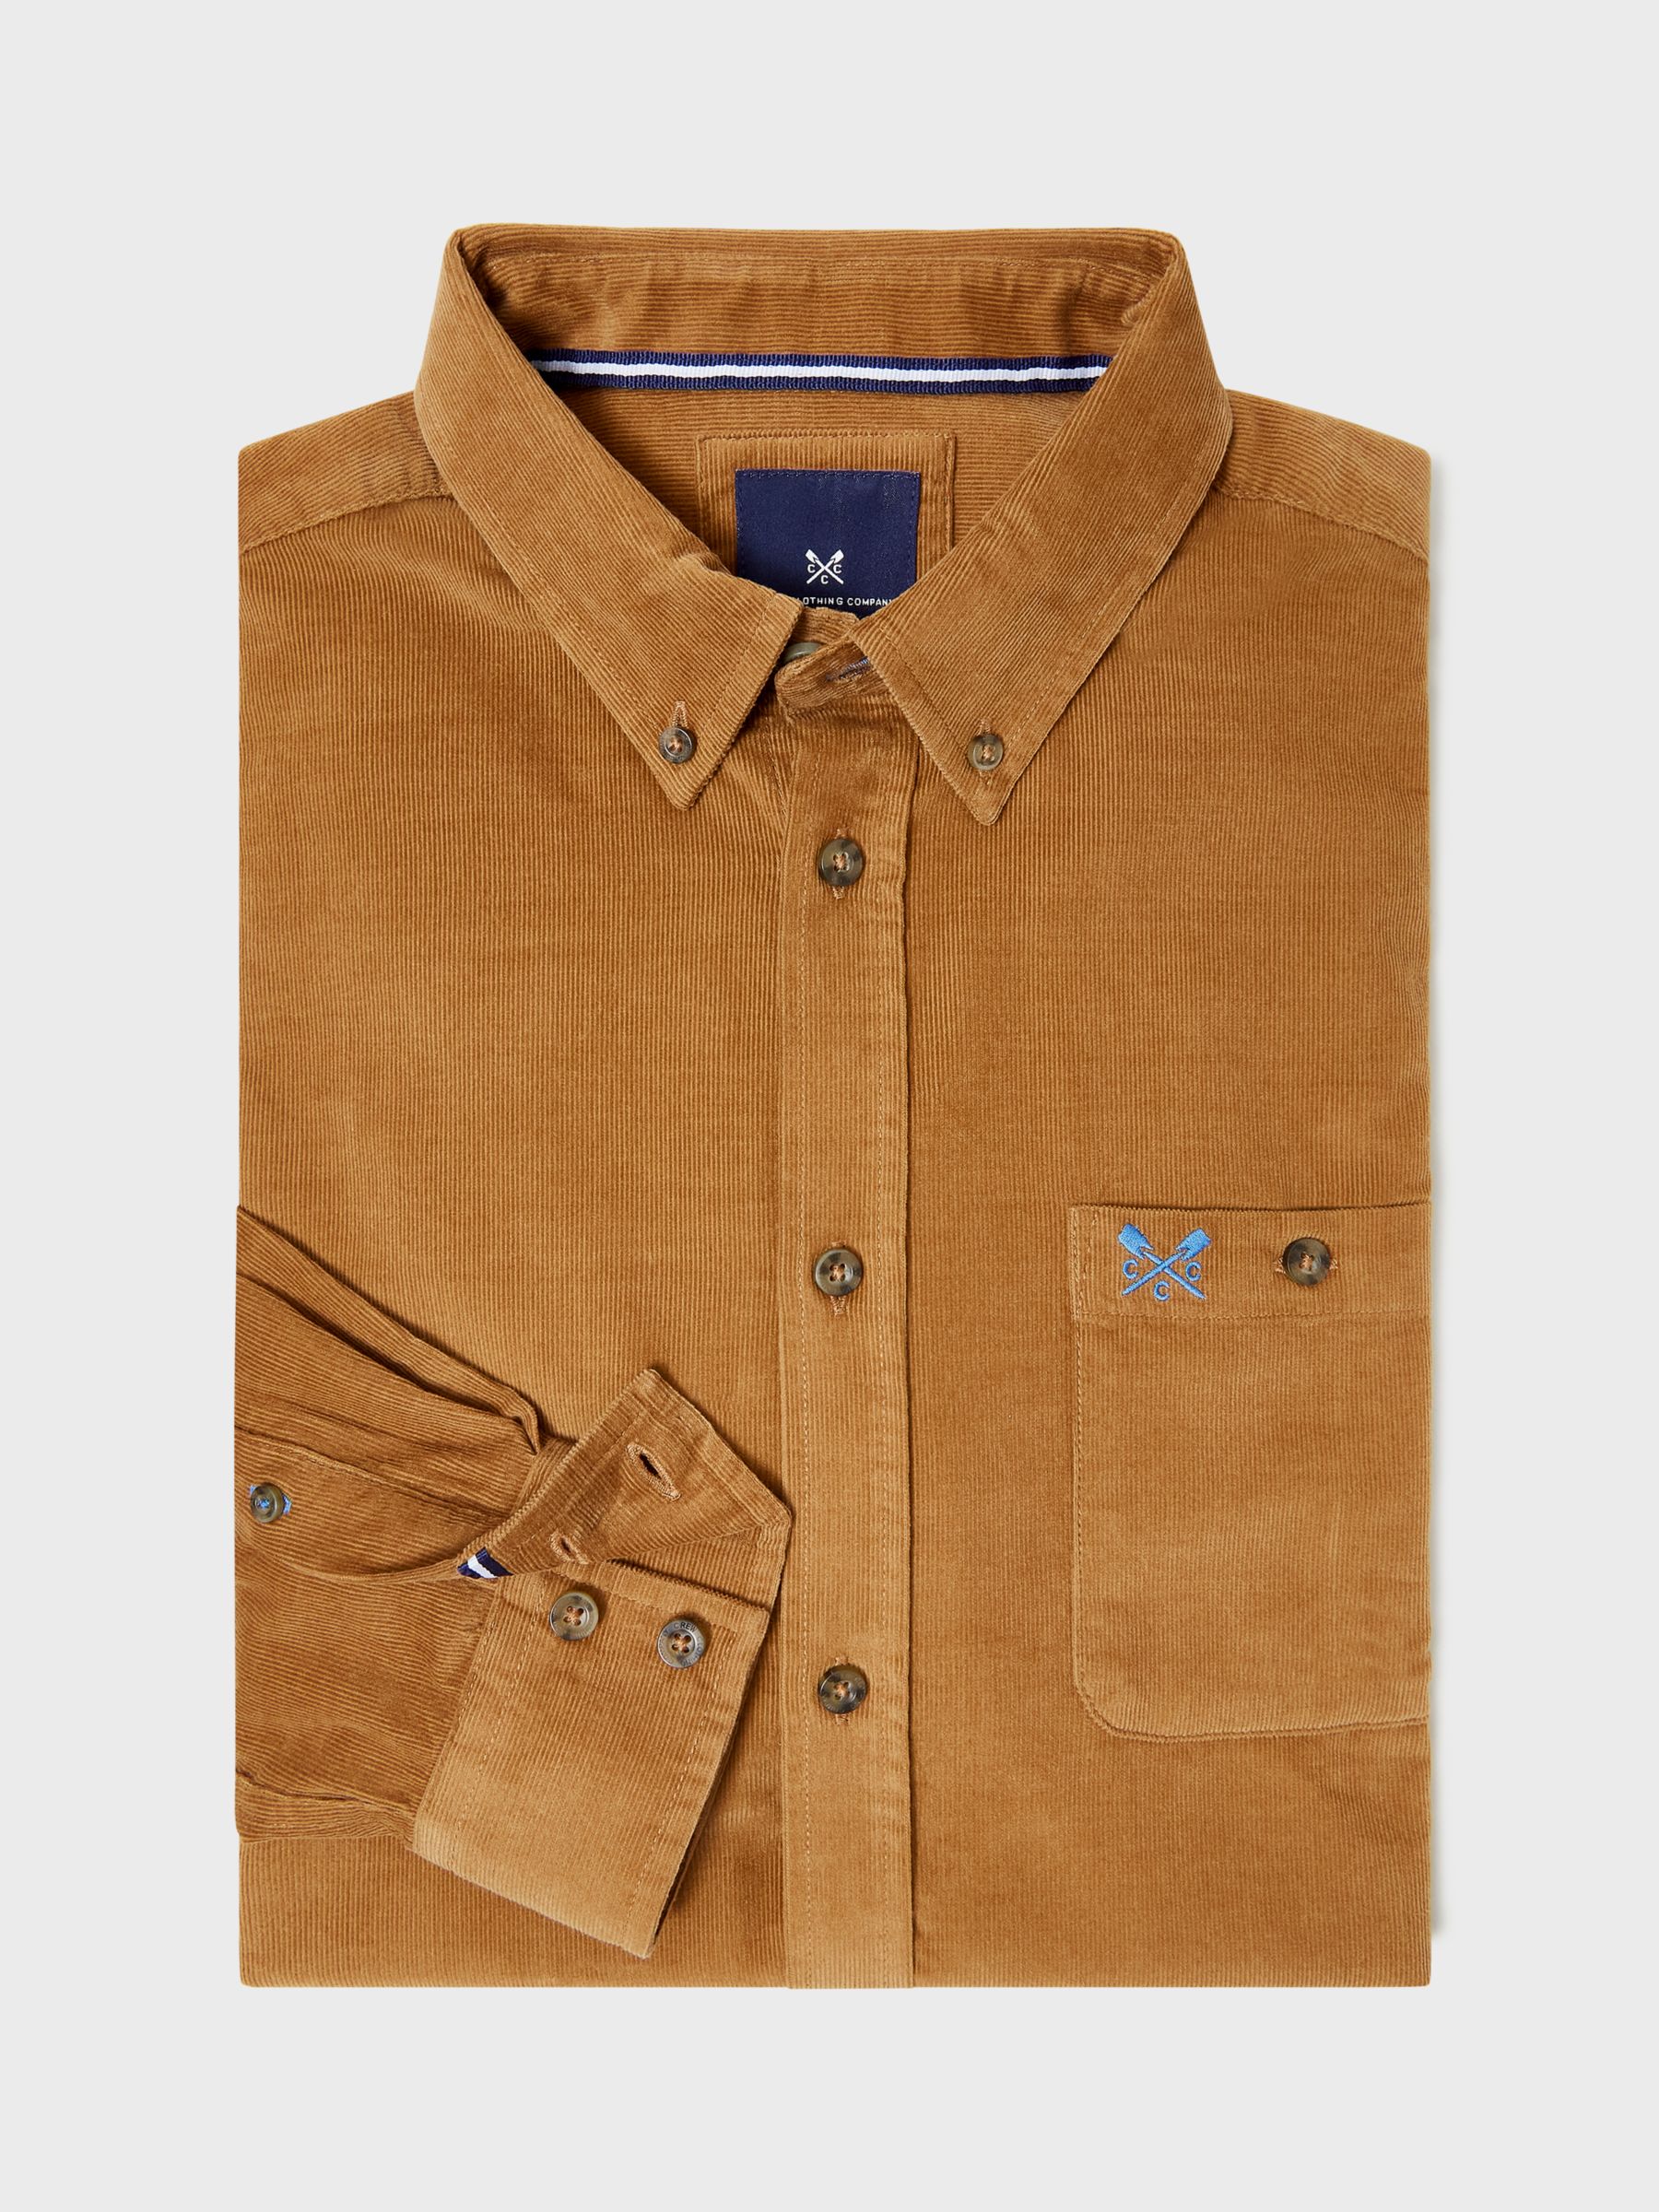 Crew Clothing Classic Cord Long Sleeve Cotton Shirt, Tan, XXXL